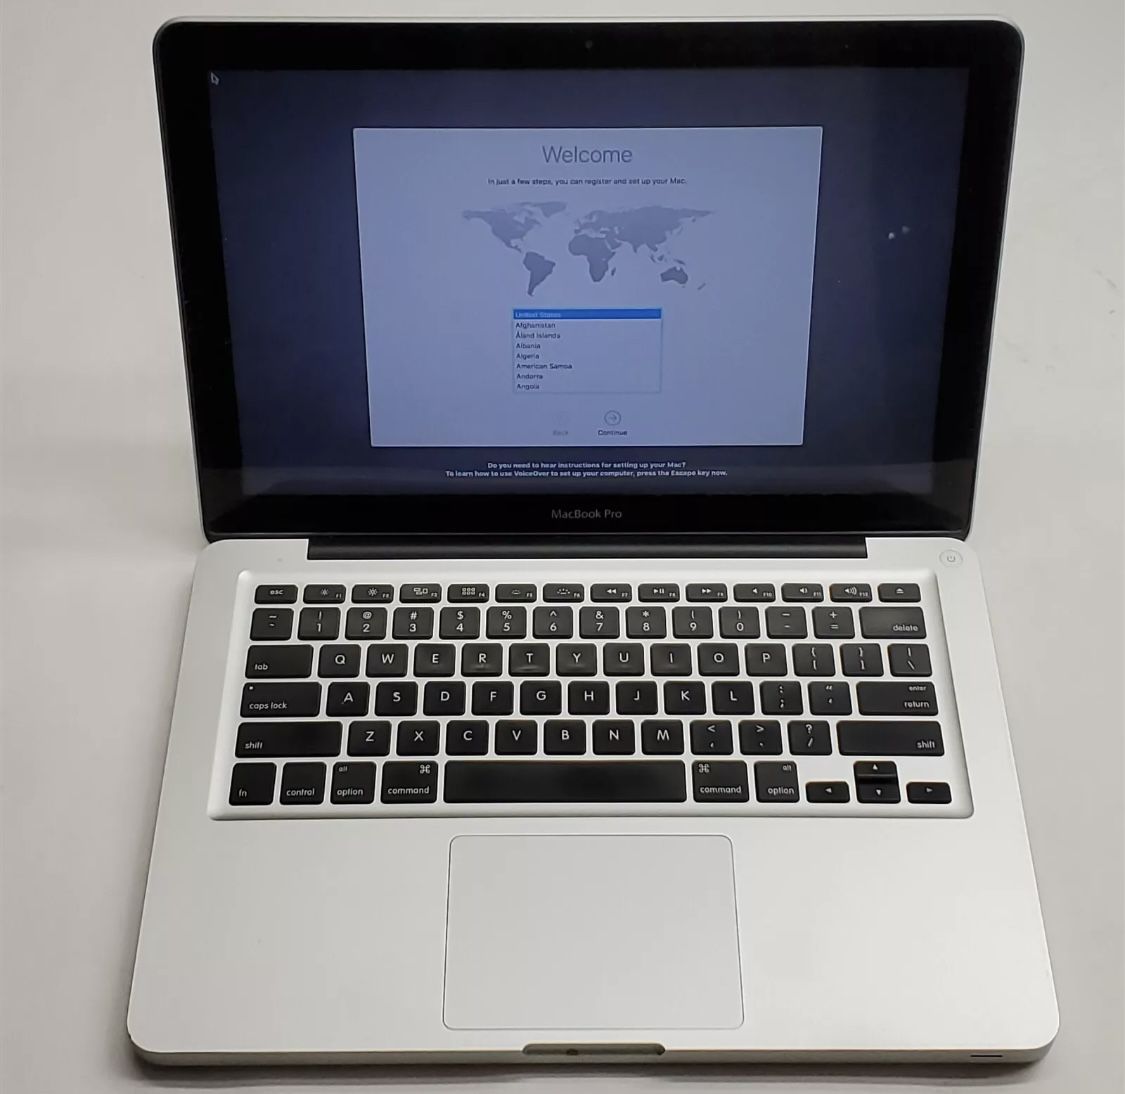 Apple Macbook Pro A1278 Intel Core i7 8 GB RAM 120 GB SSD Webcam OSX 10.11.6